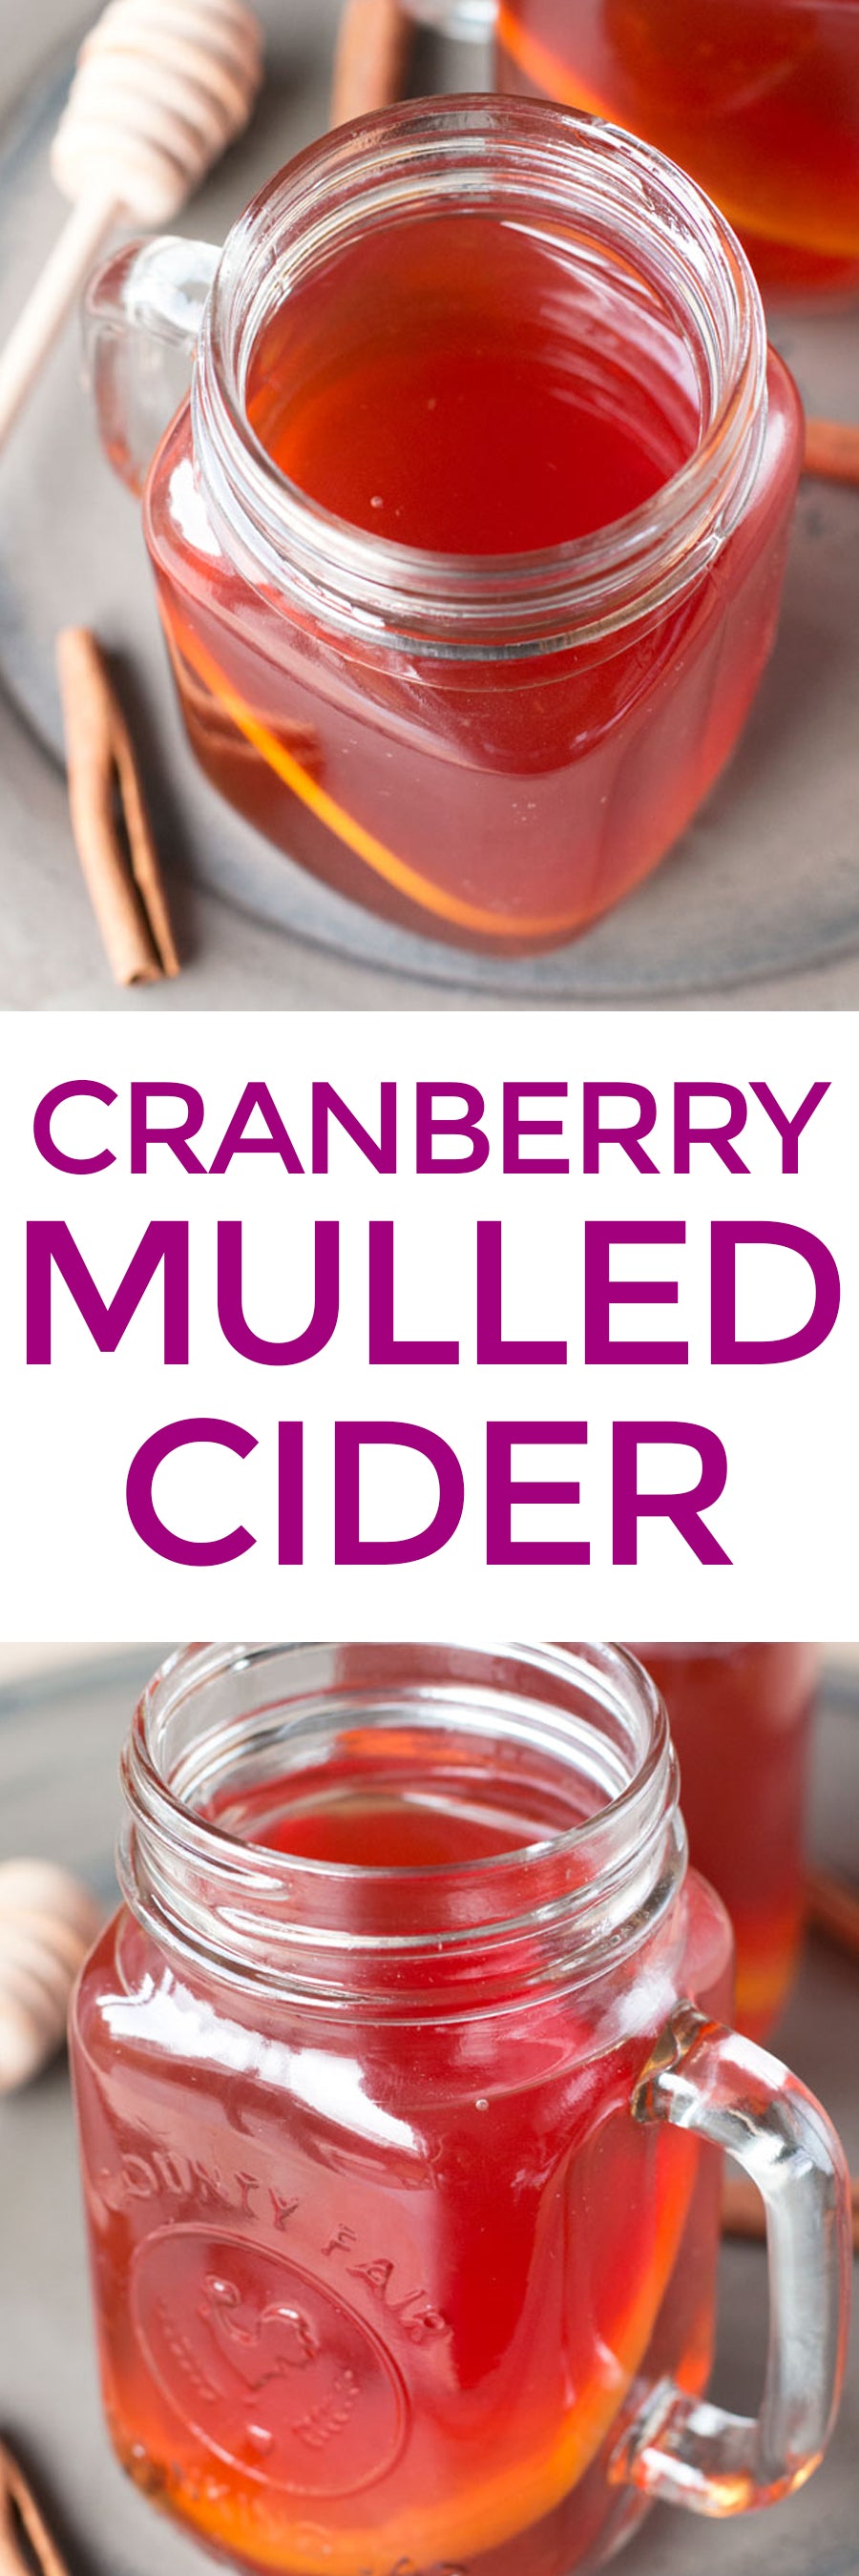 Cranberry Mulled Cider | pigofthemonth.com #mulledcider #holiday #christmas